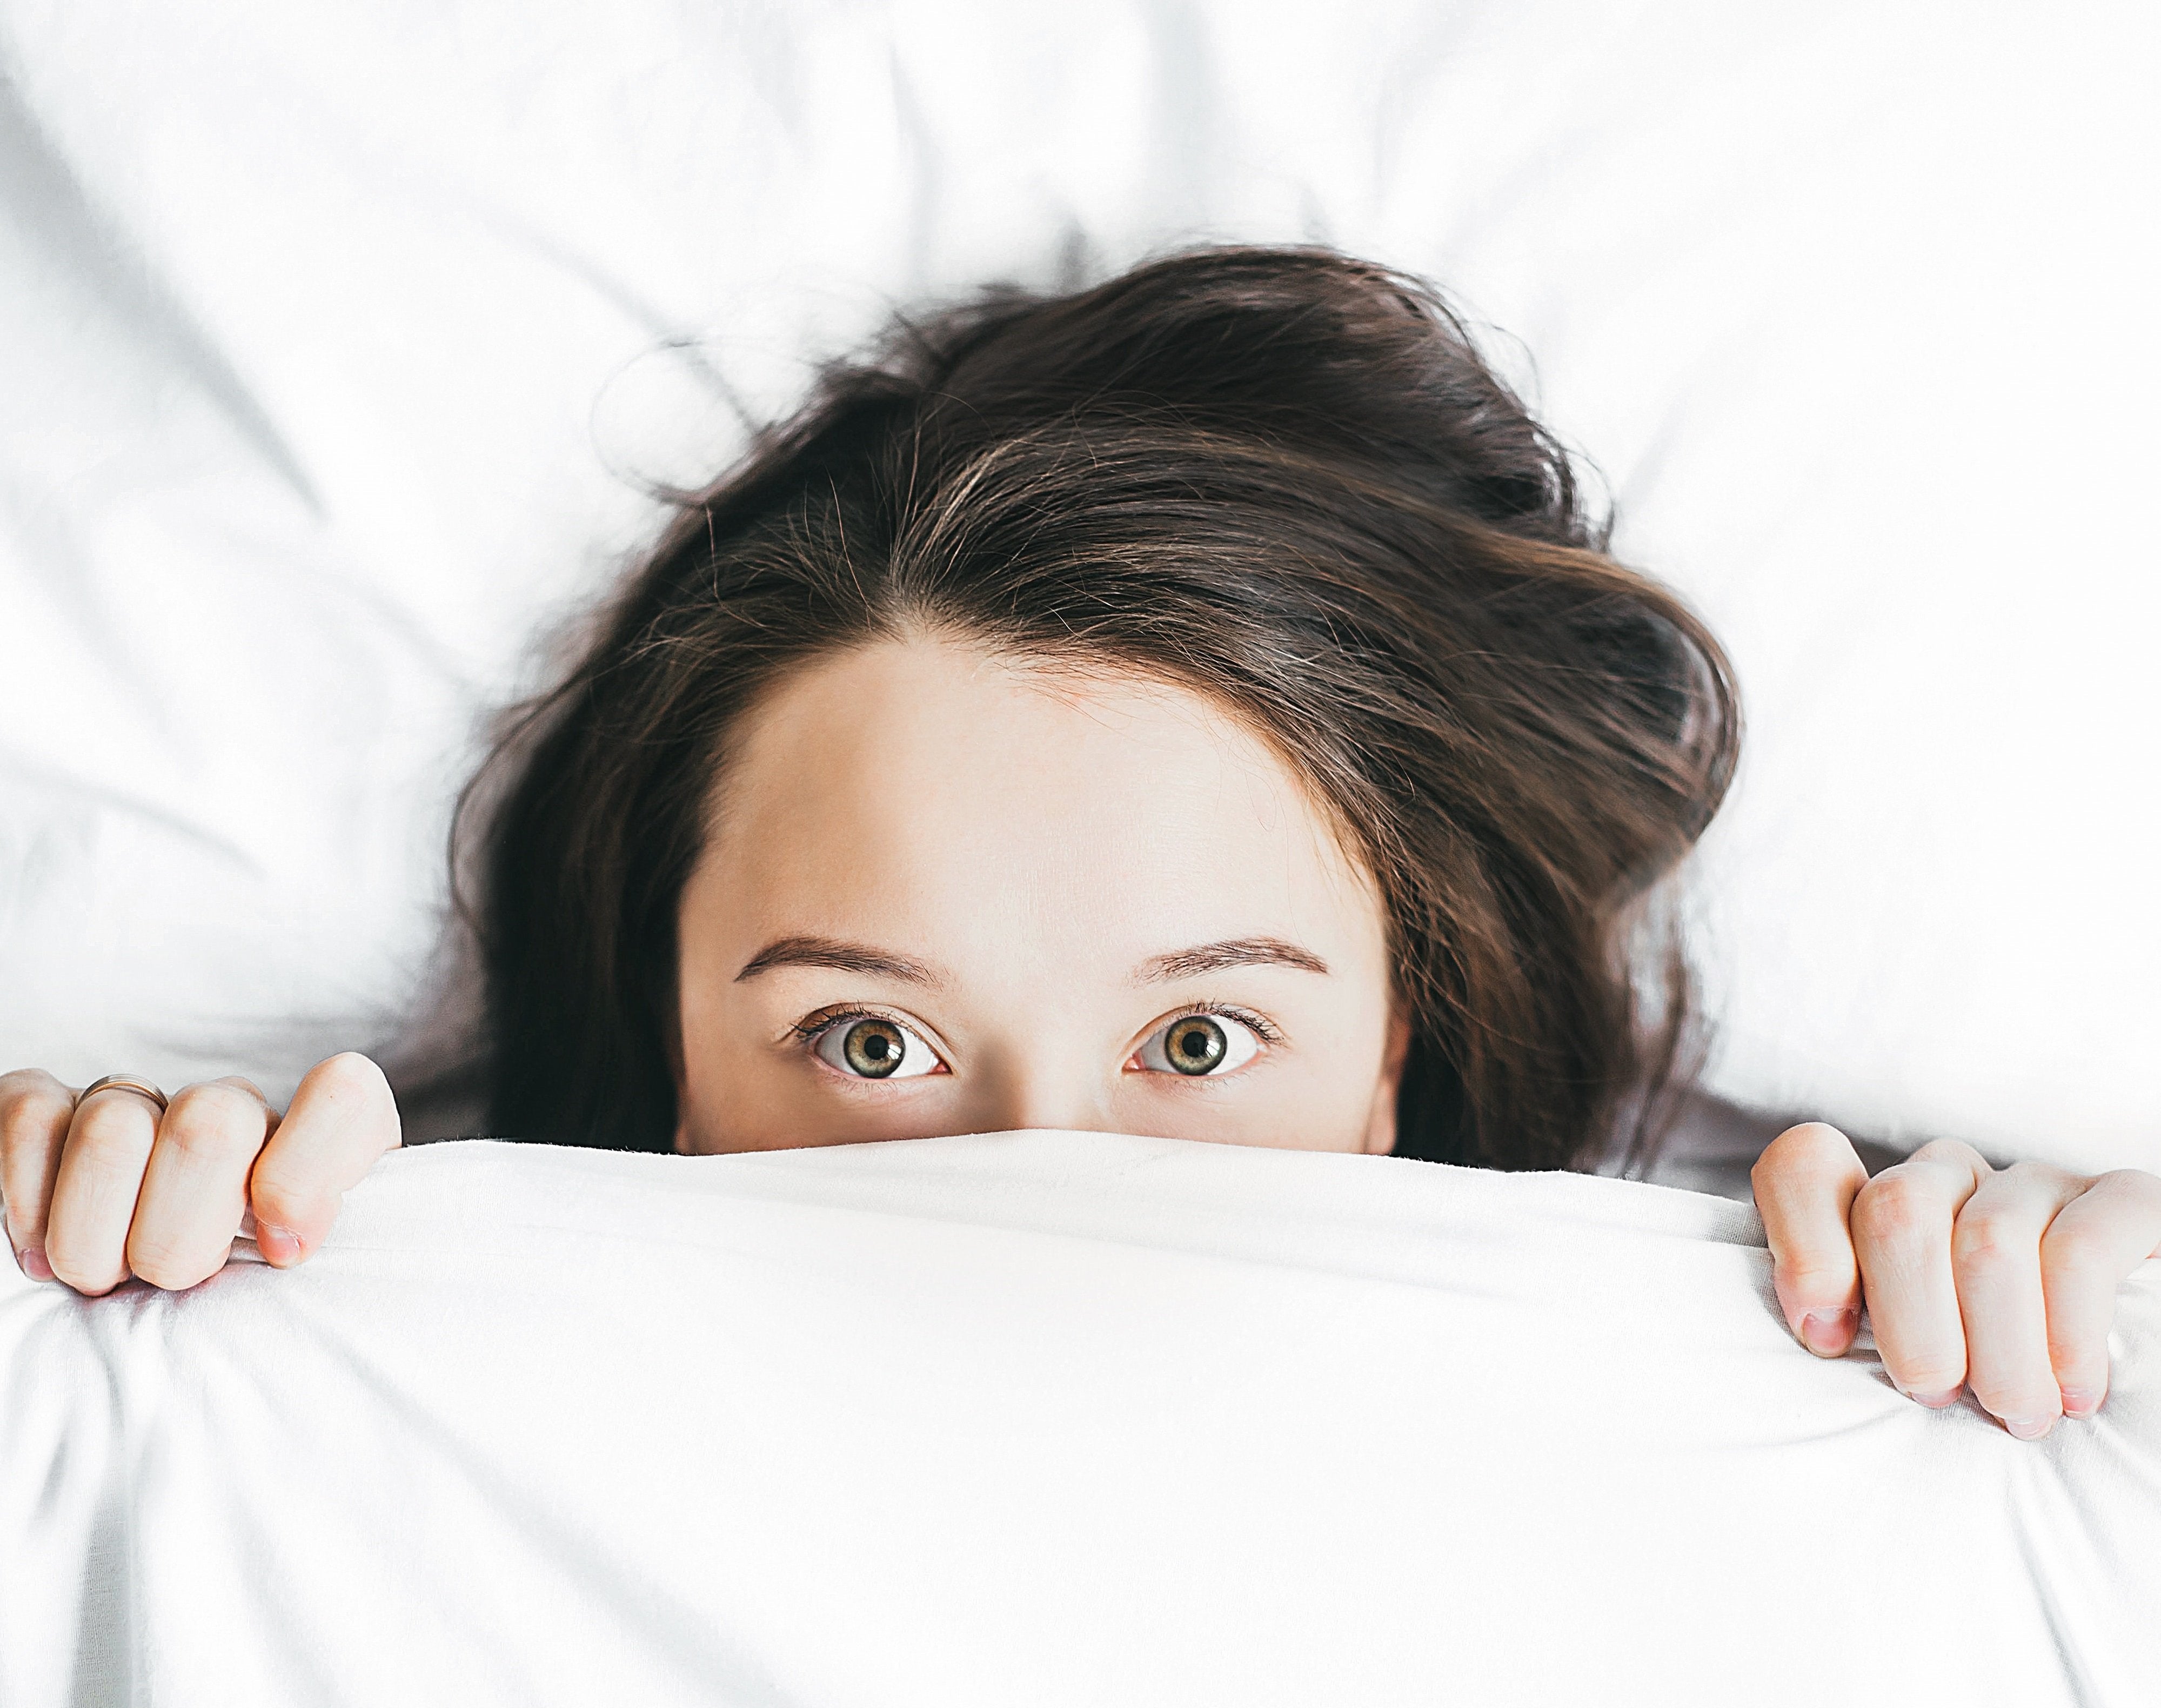 Having trouble sleeping? Here's 4-steps to sleep better